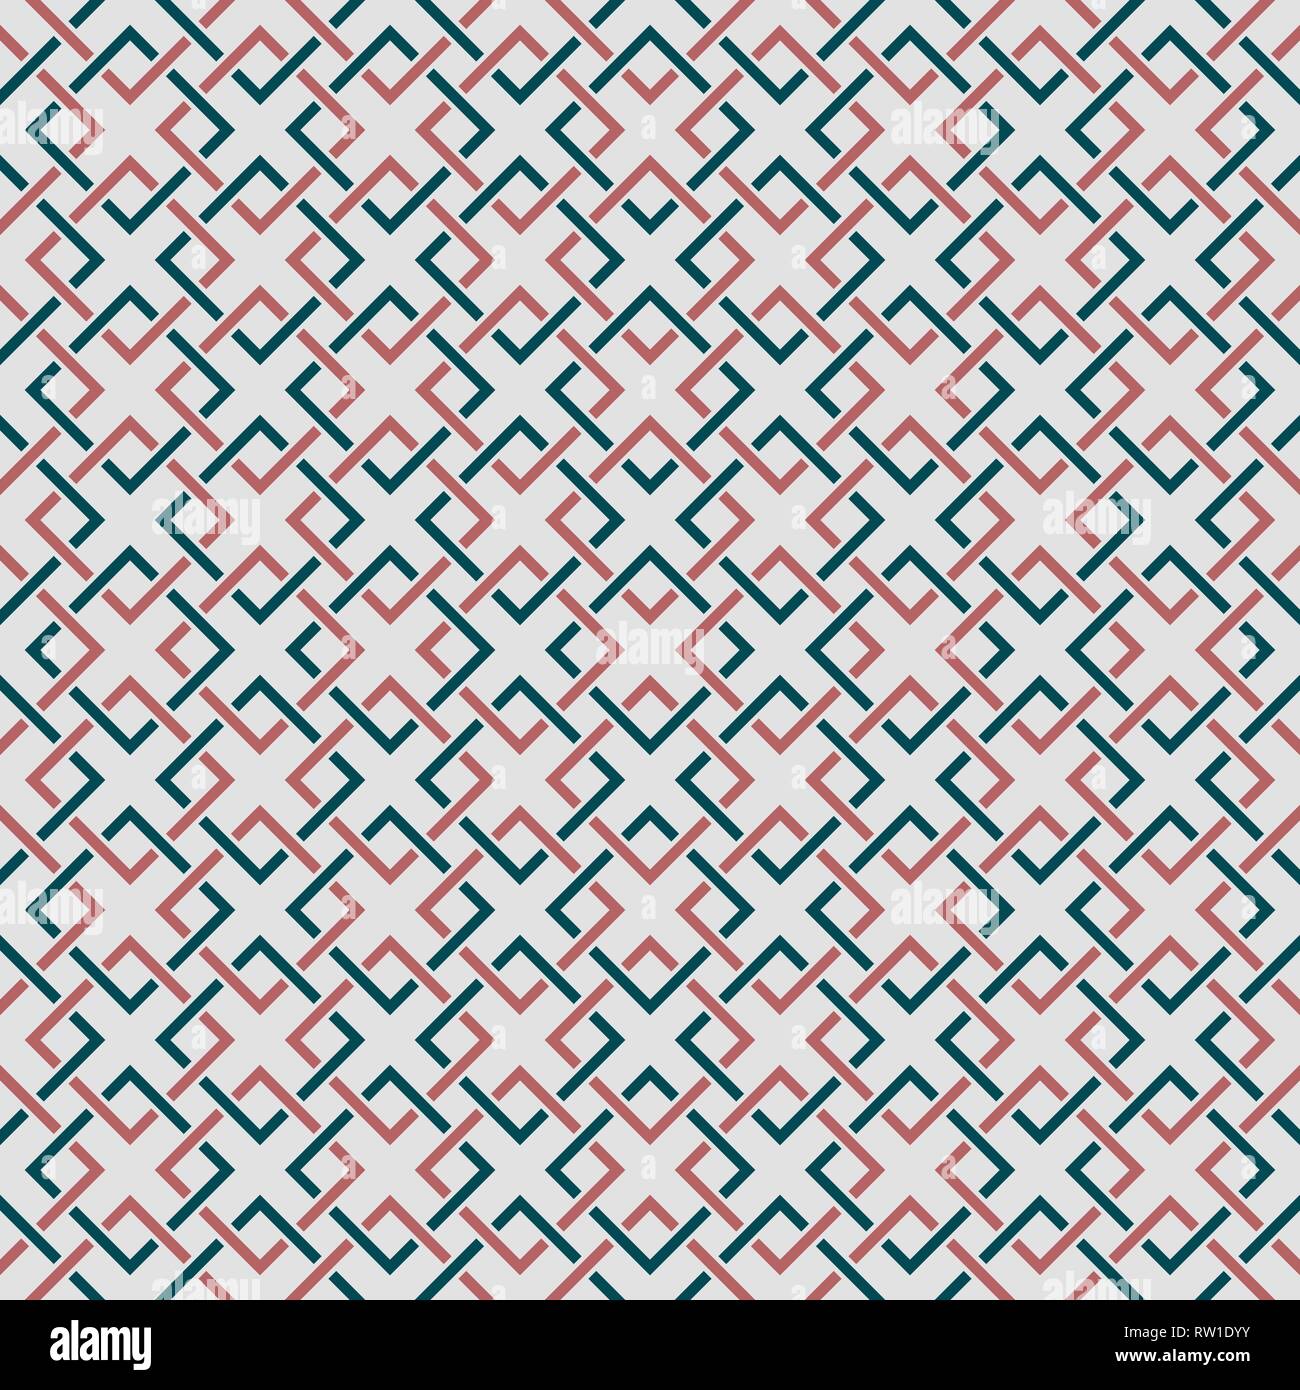 simple square geometric patterns